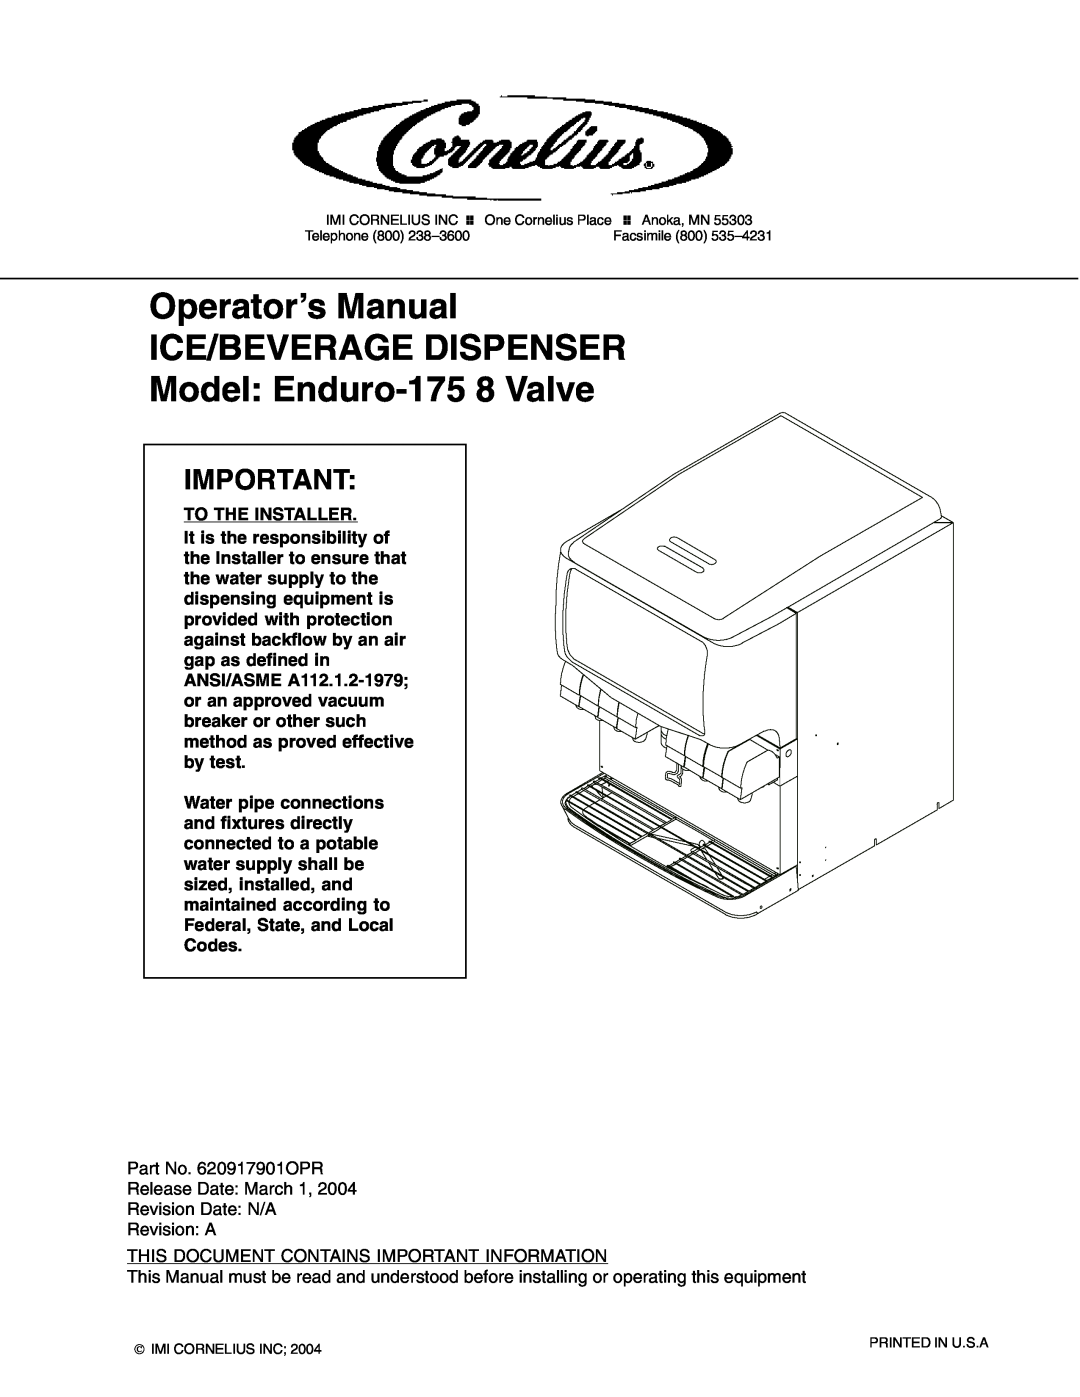 Cornelius 175 8 Valve manual Operator’s Manual ICE/BEVERAGE DISPENSER, Model Enduro-1758 Valve 